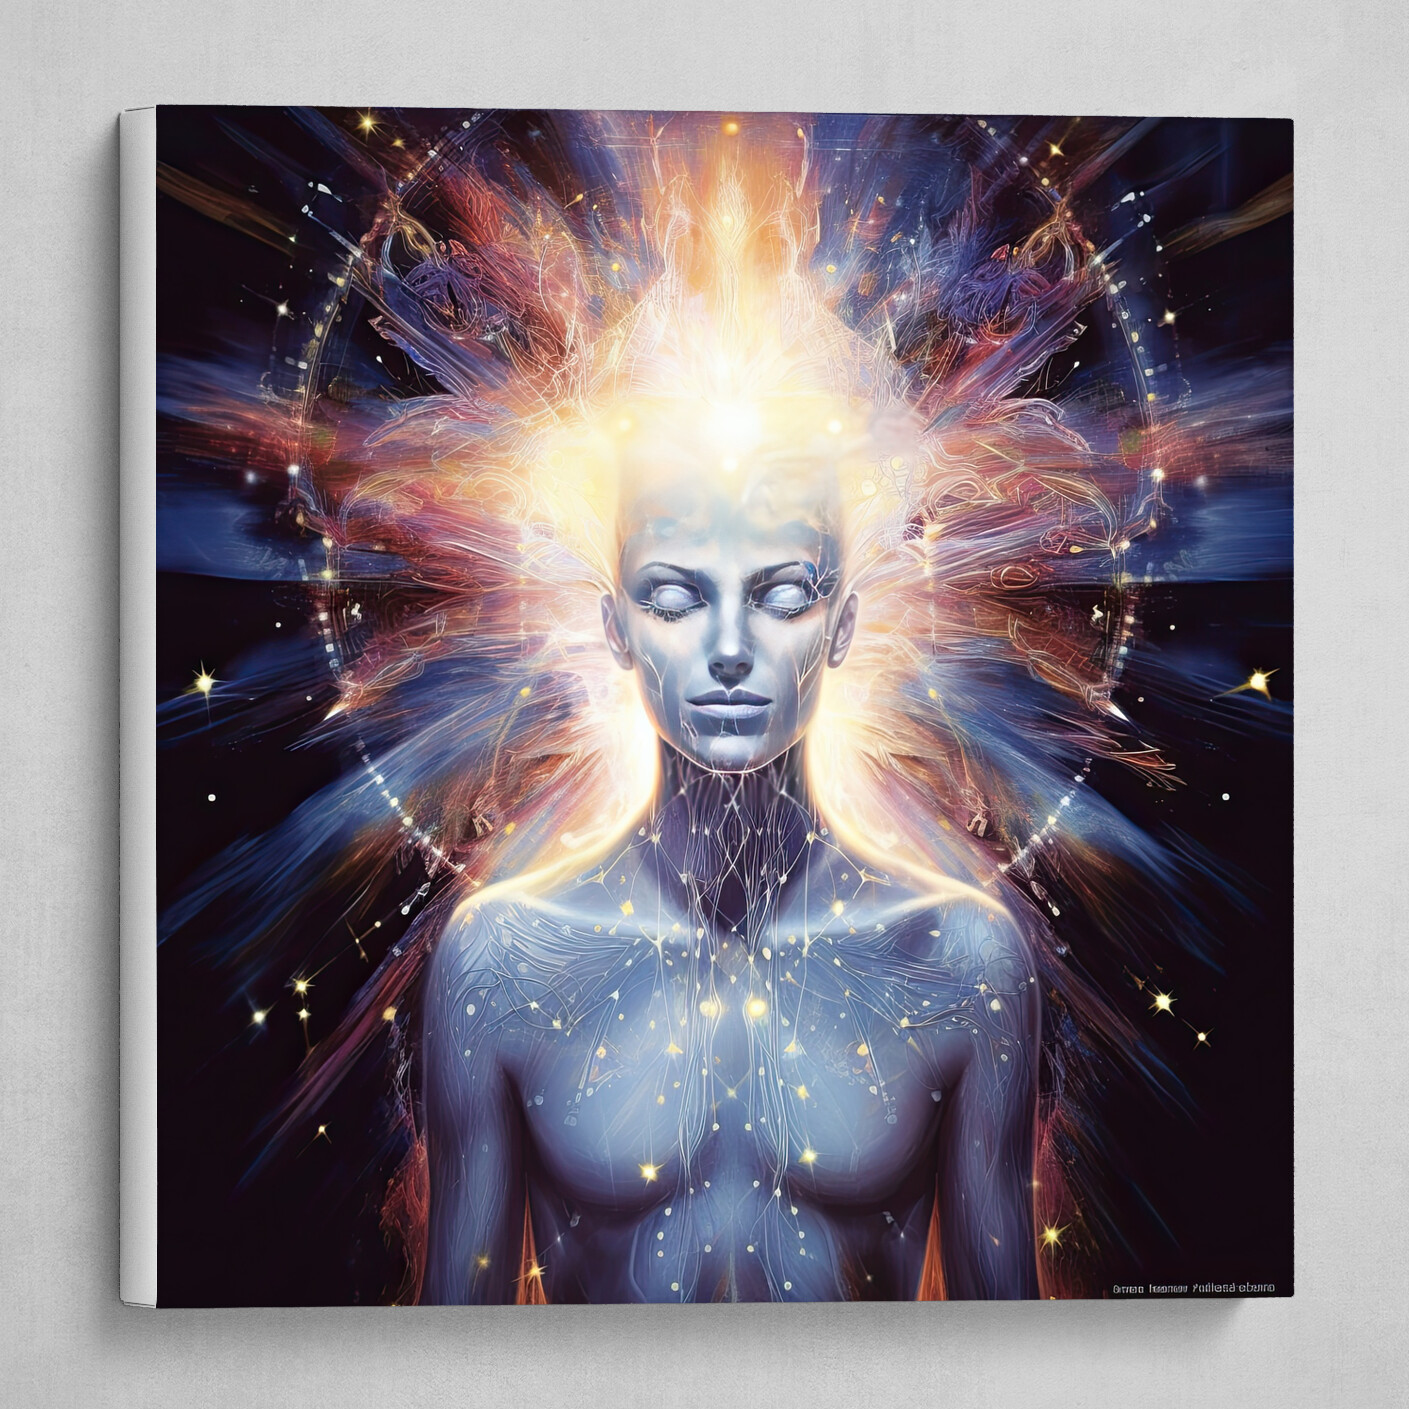 "Stellar Enlightenment: The Radiant Meditator in the Cosmos"